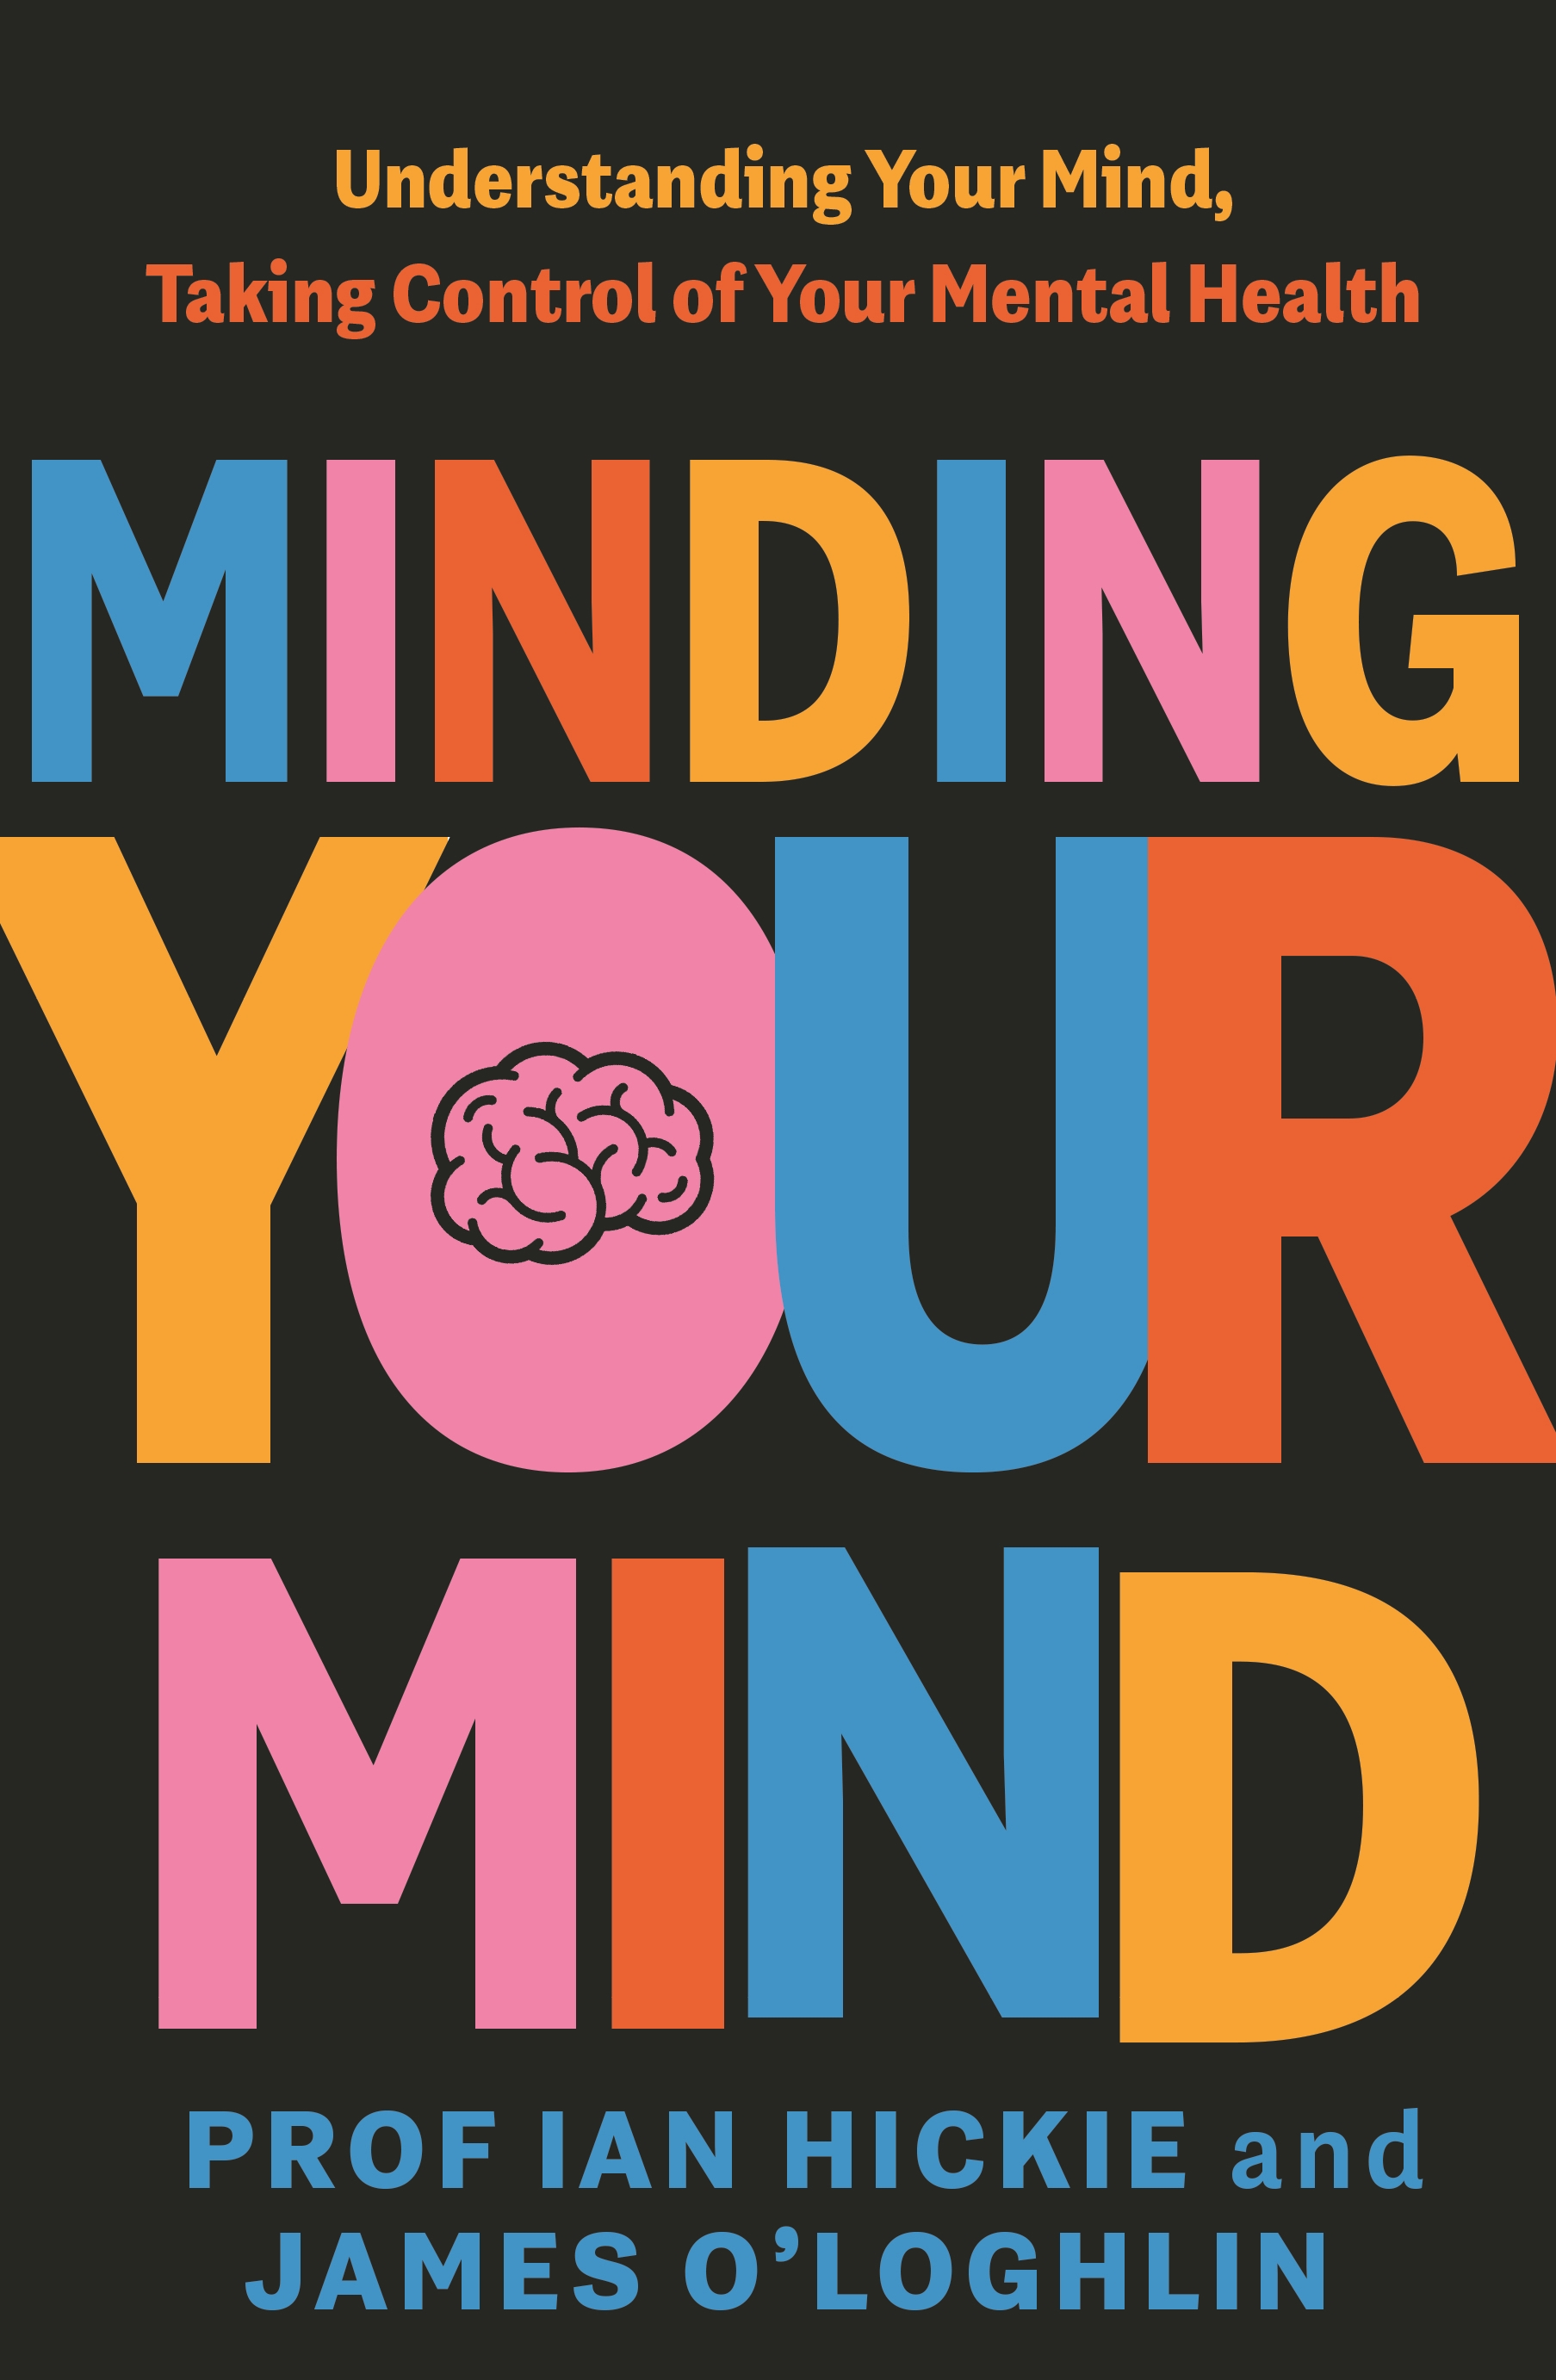 Minding Your Mind by James O'Loghlin - Penguin Books Australia